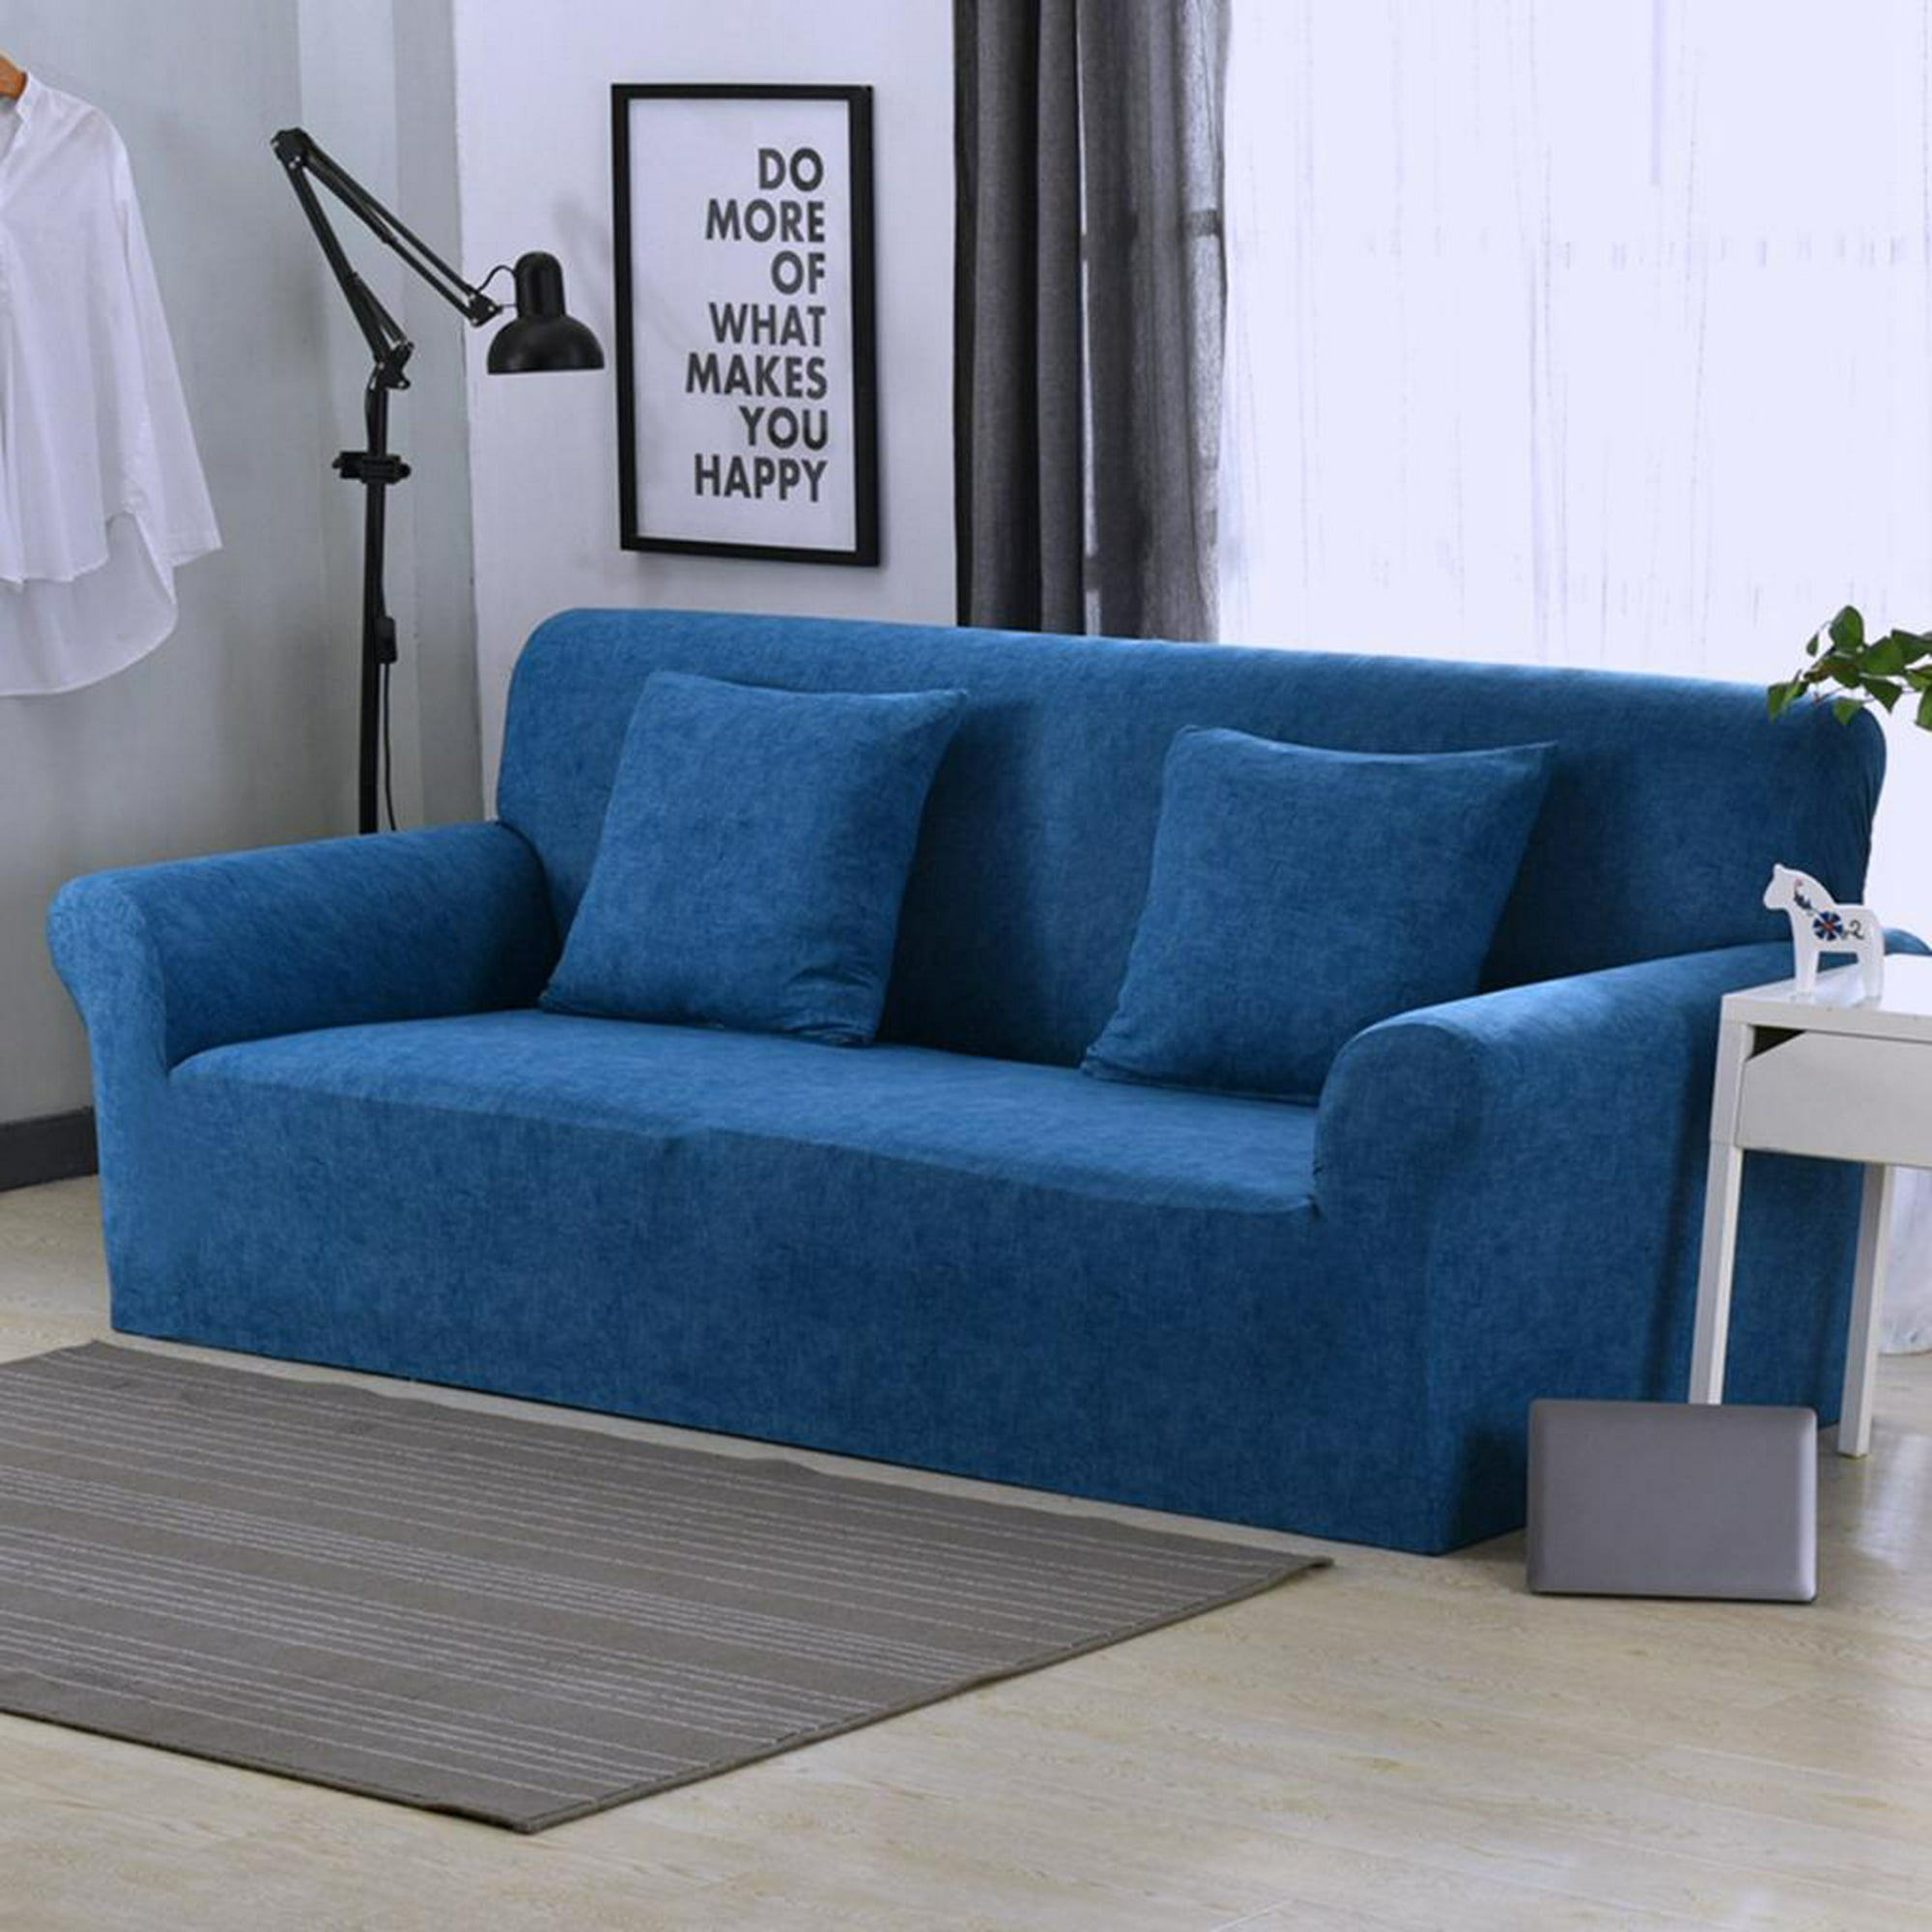 Funda de sofá en forma de L para sala de estar, impermeable,  antideslizante, acolchada, gris sólido, Protector para Chaise Longue